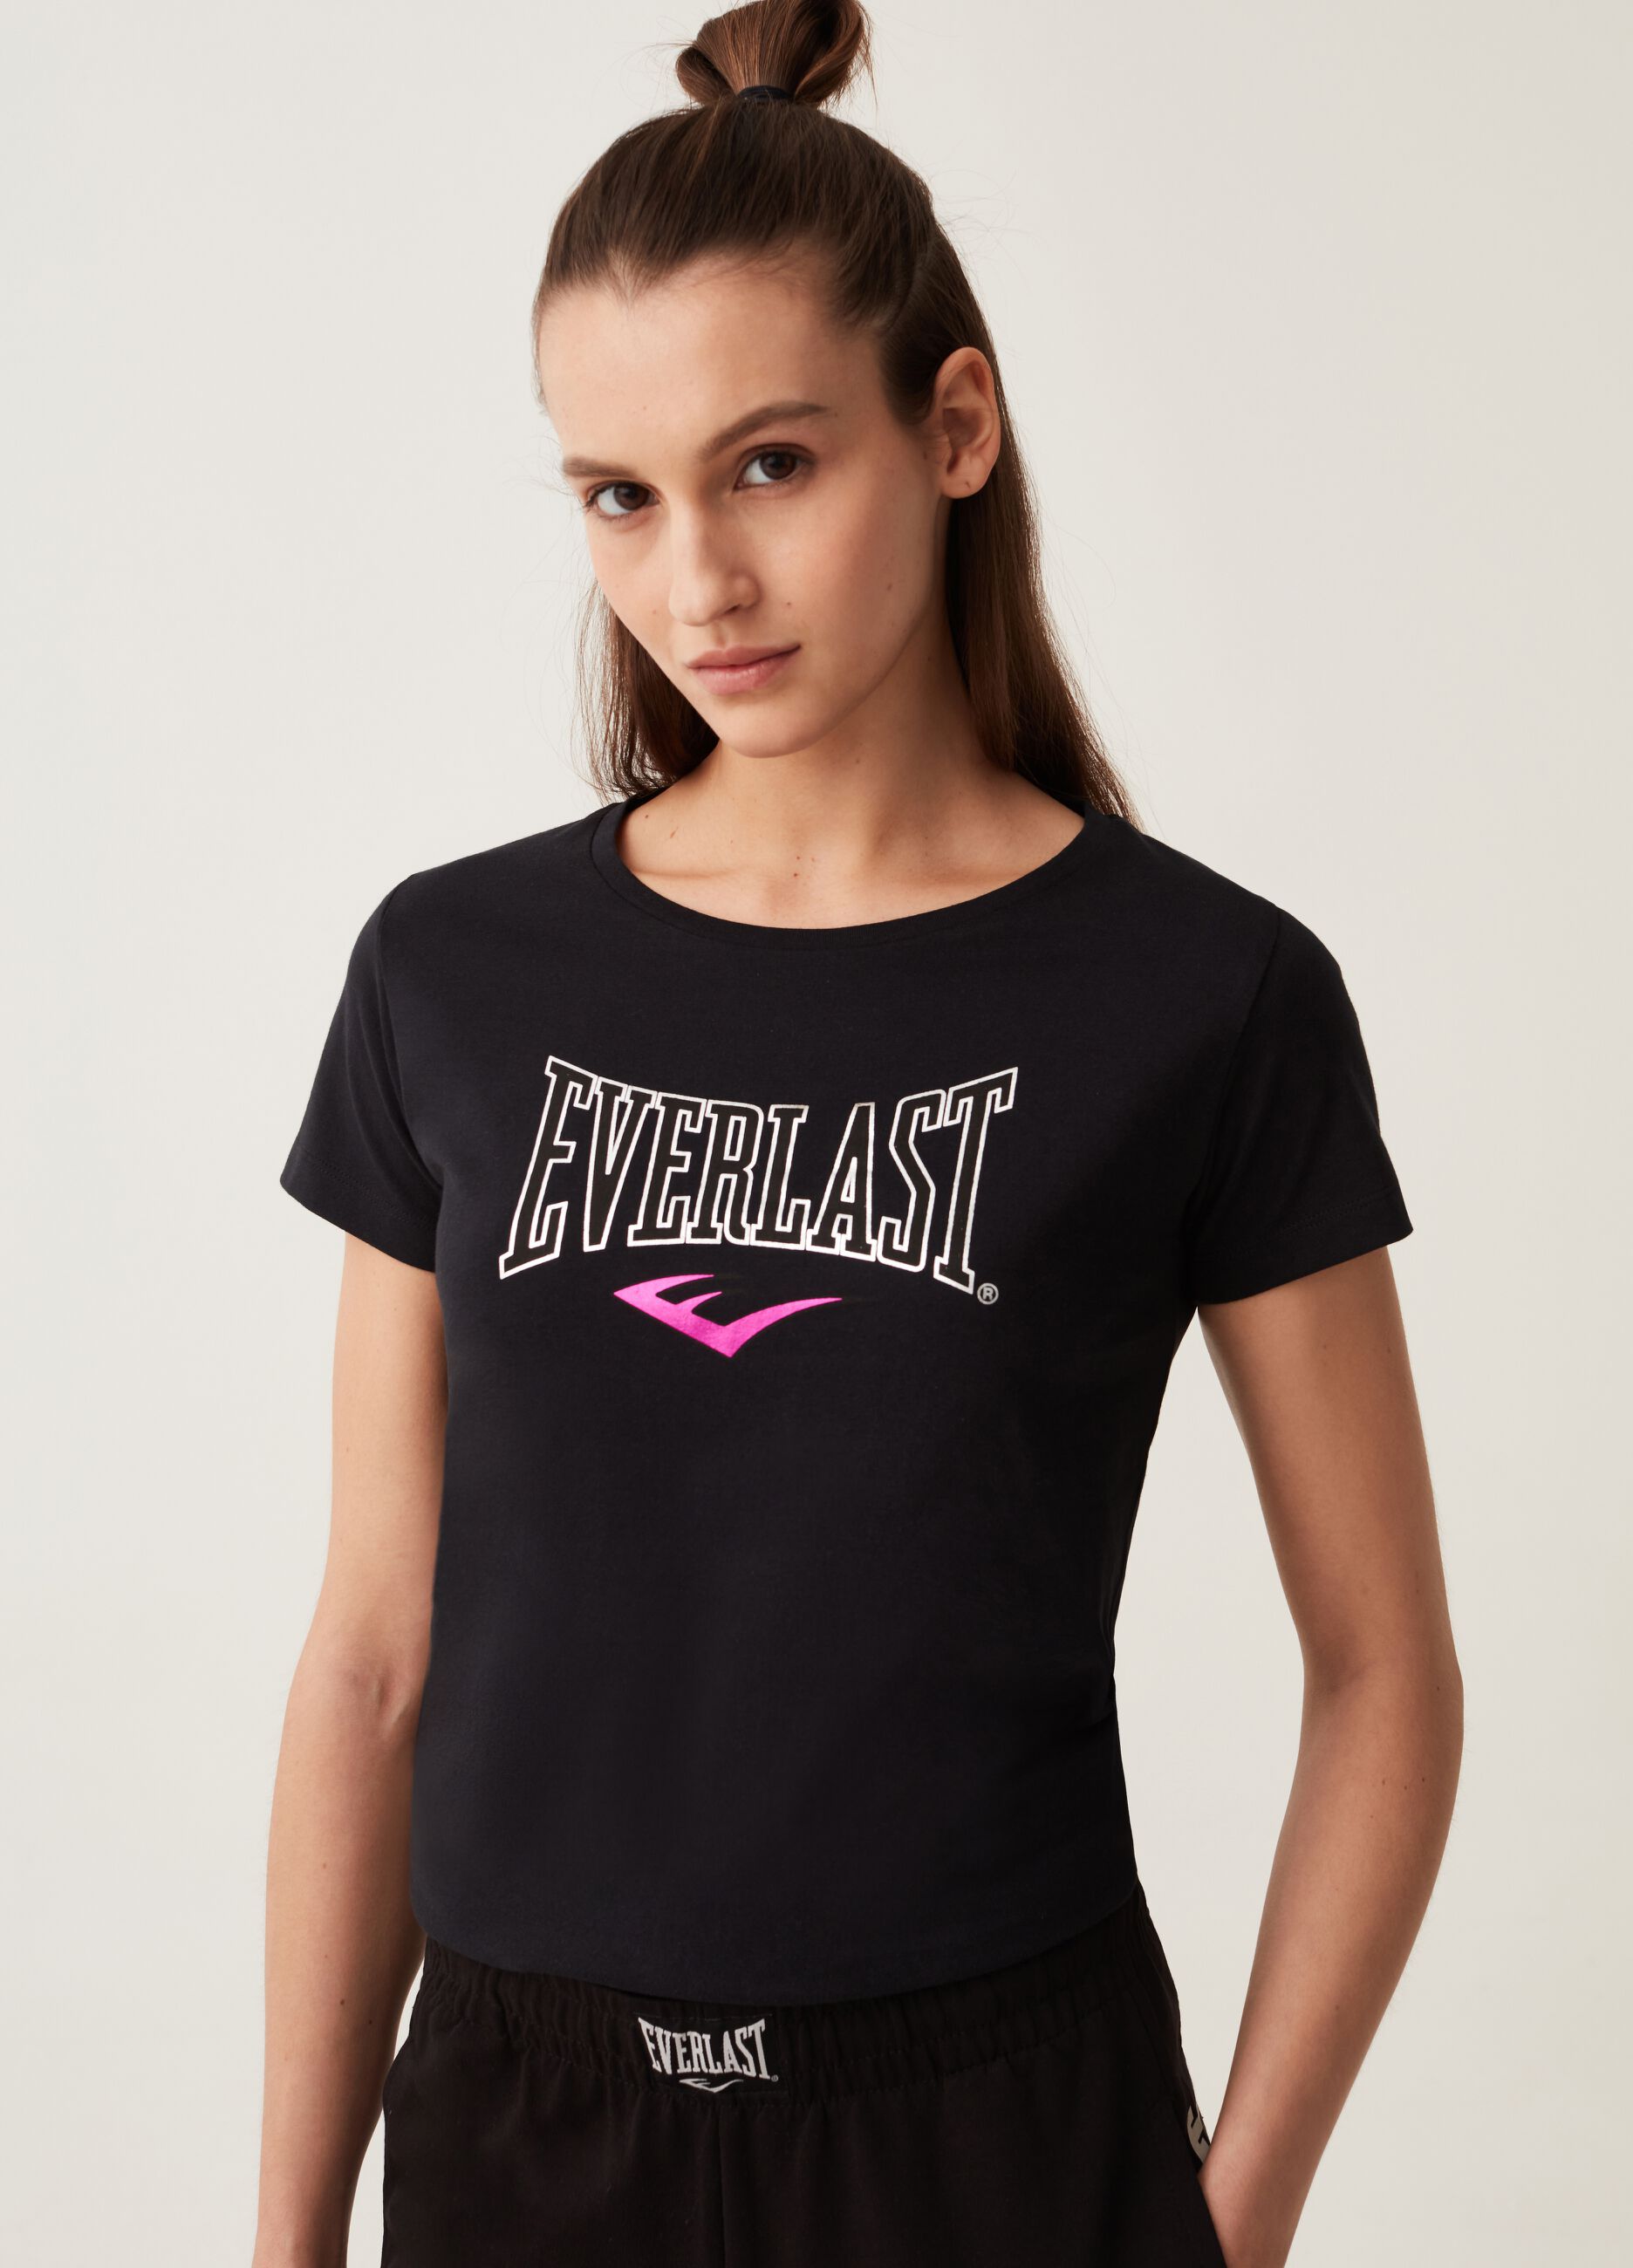 Cotton T-shirt with foil Everlast print